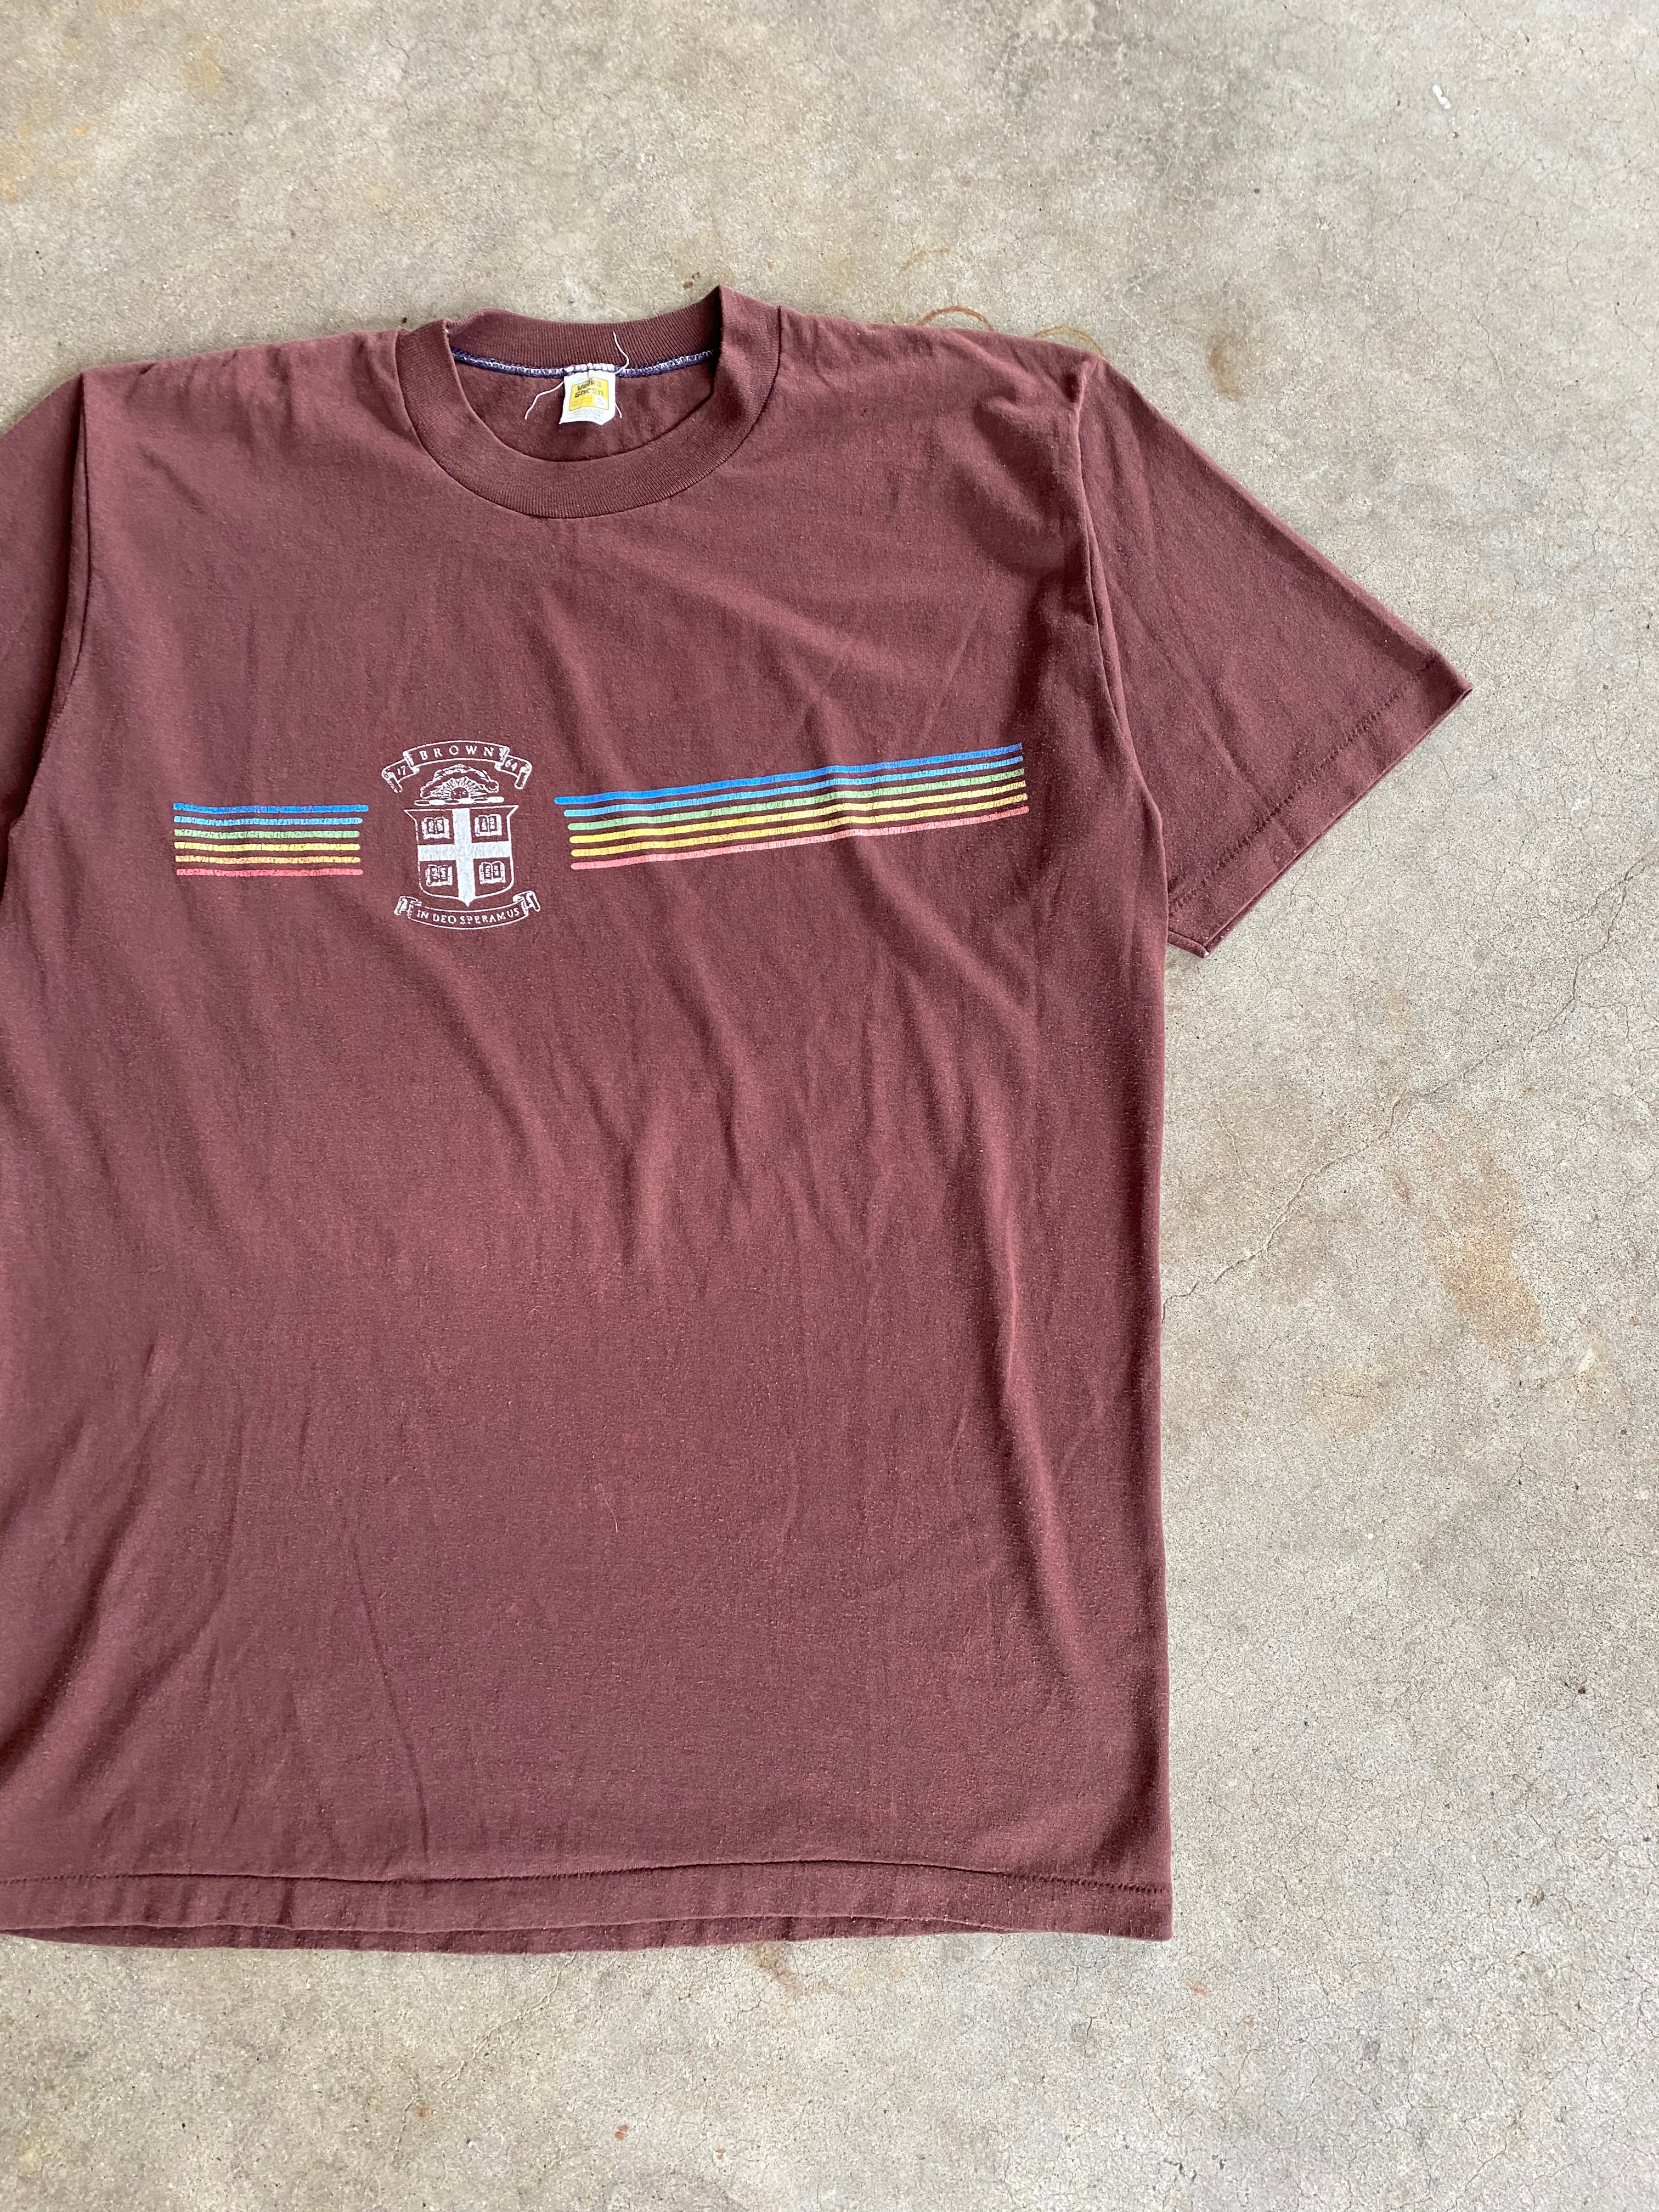 1980s Brown University T-Shirt (L)